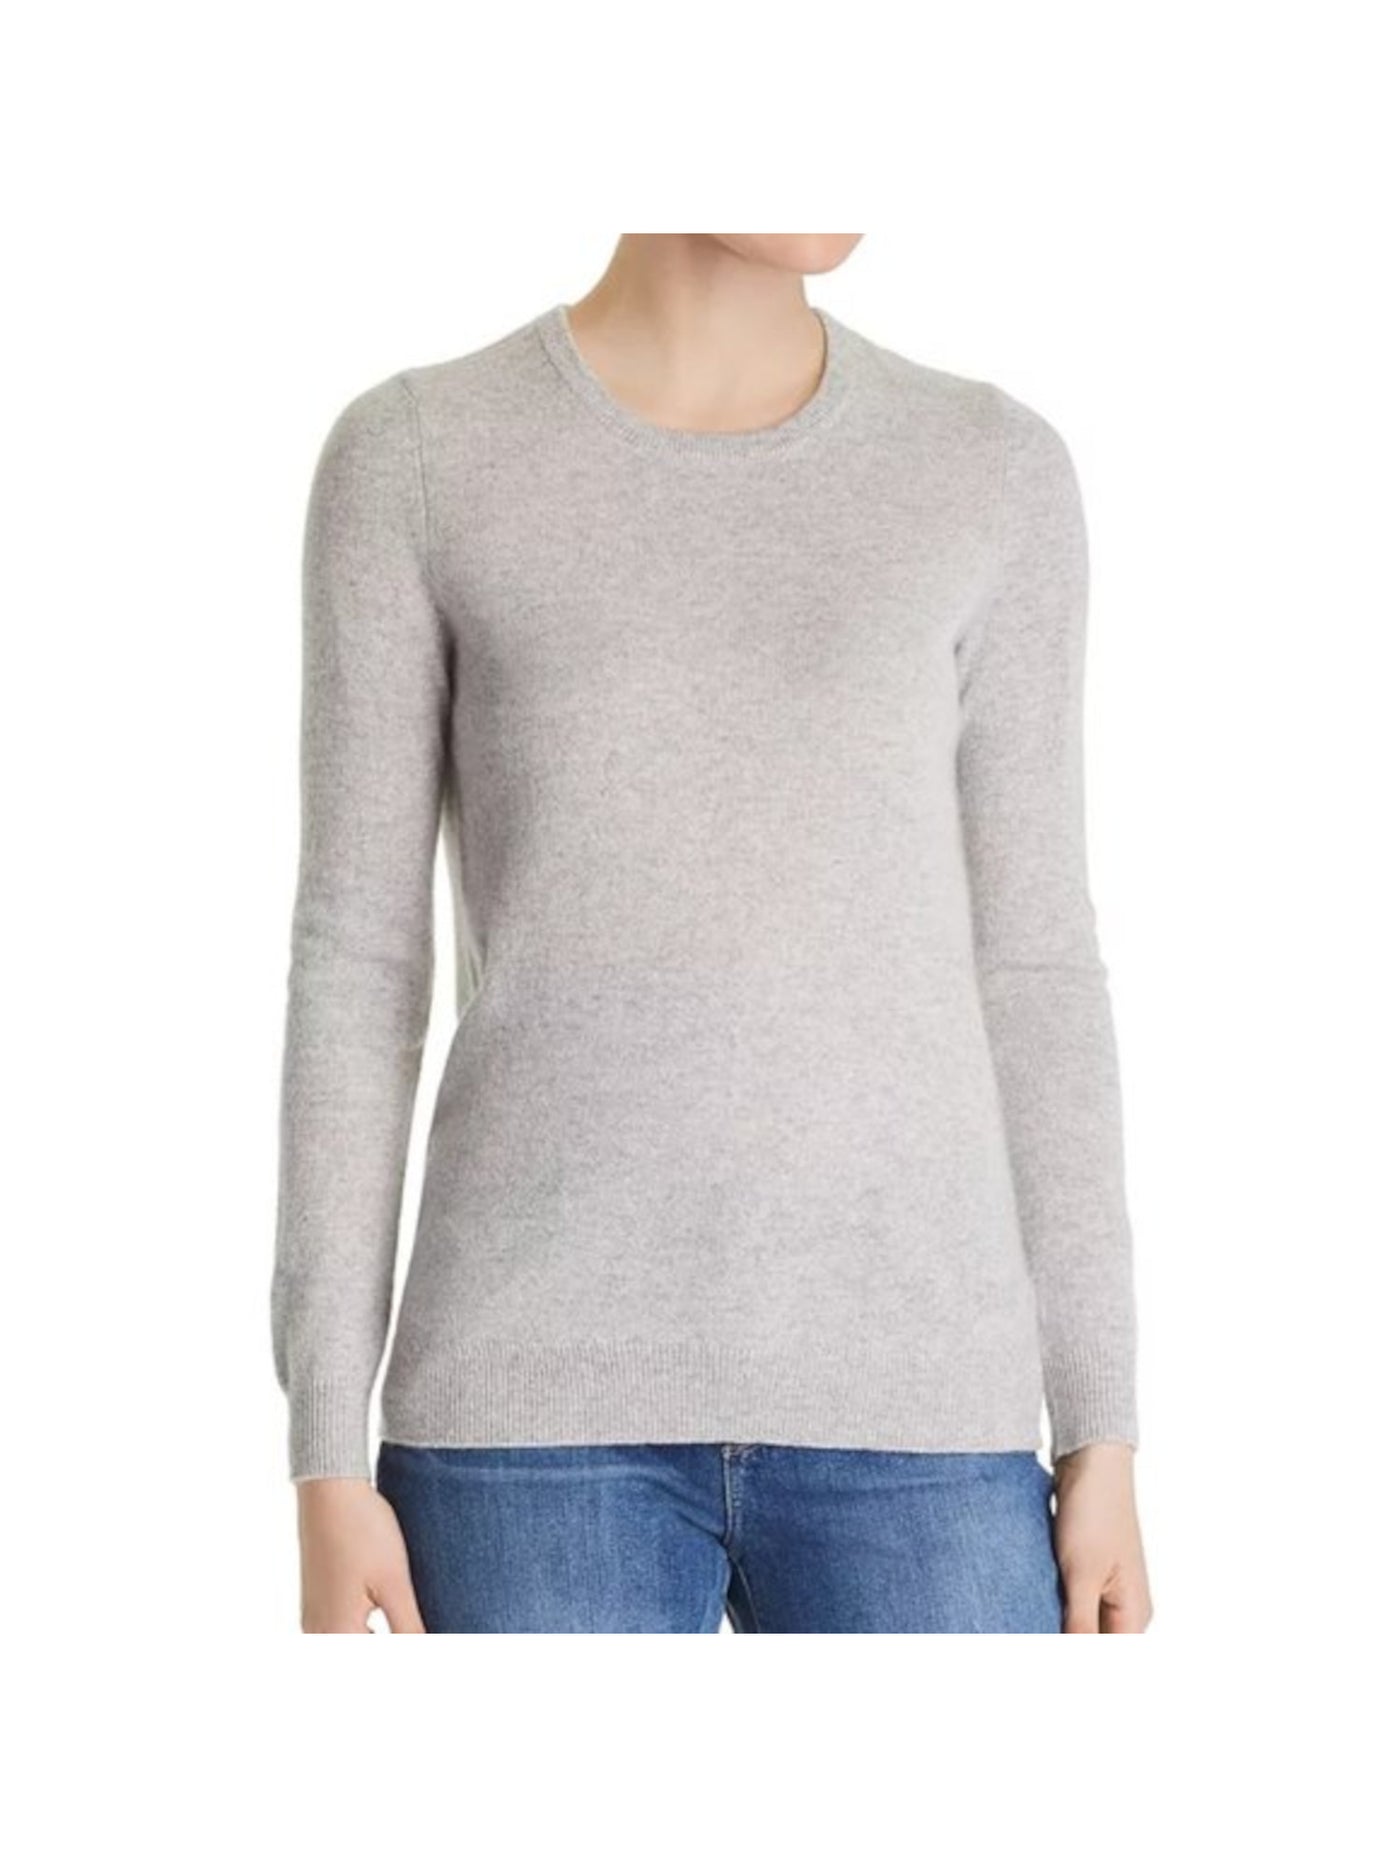 Designer Brand Womens Gray Cashmere Long Sleeve Crew Neck Wear To Work Sweater L